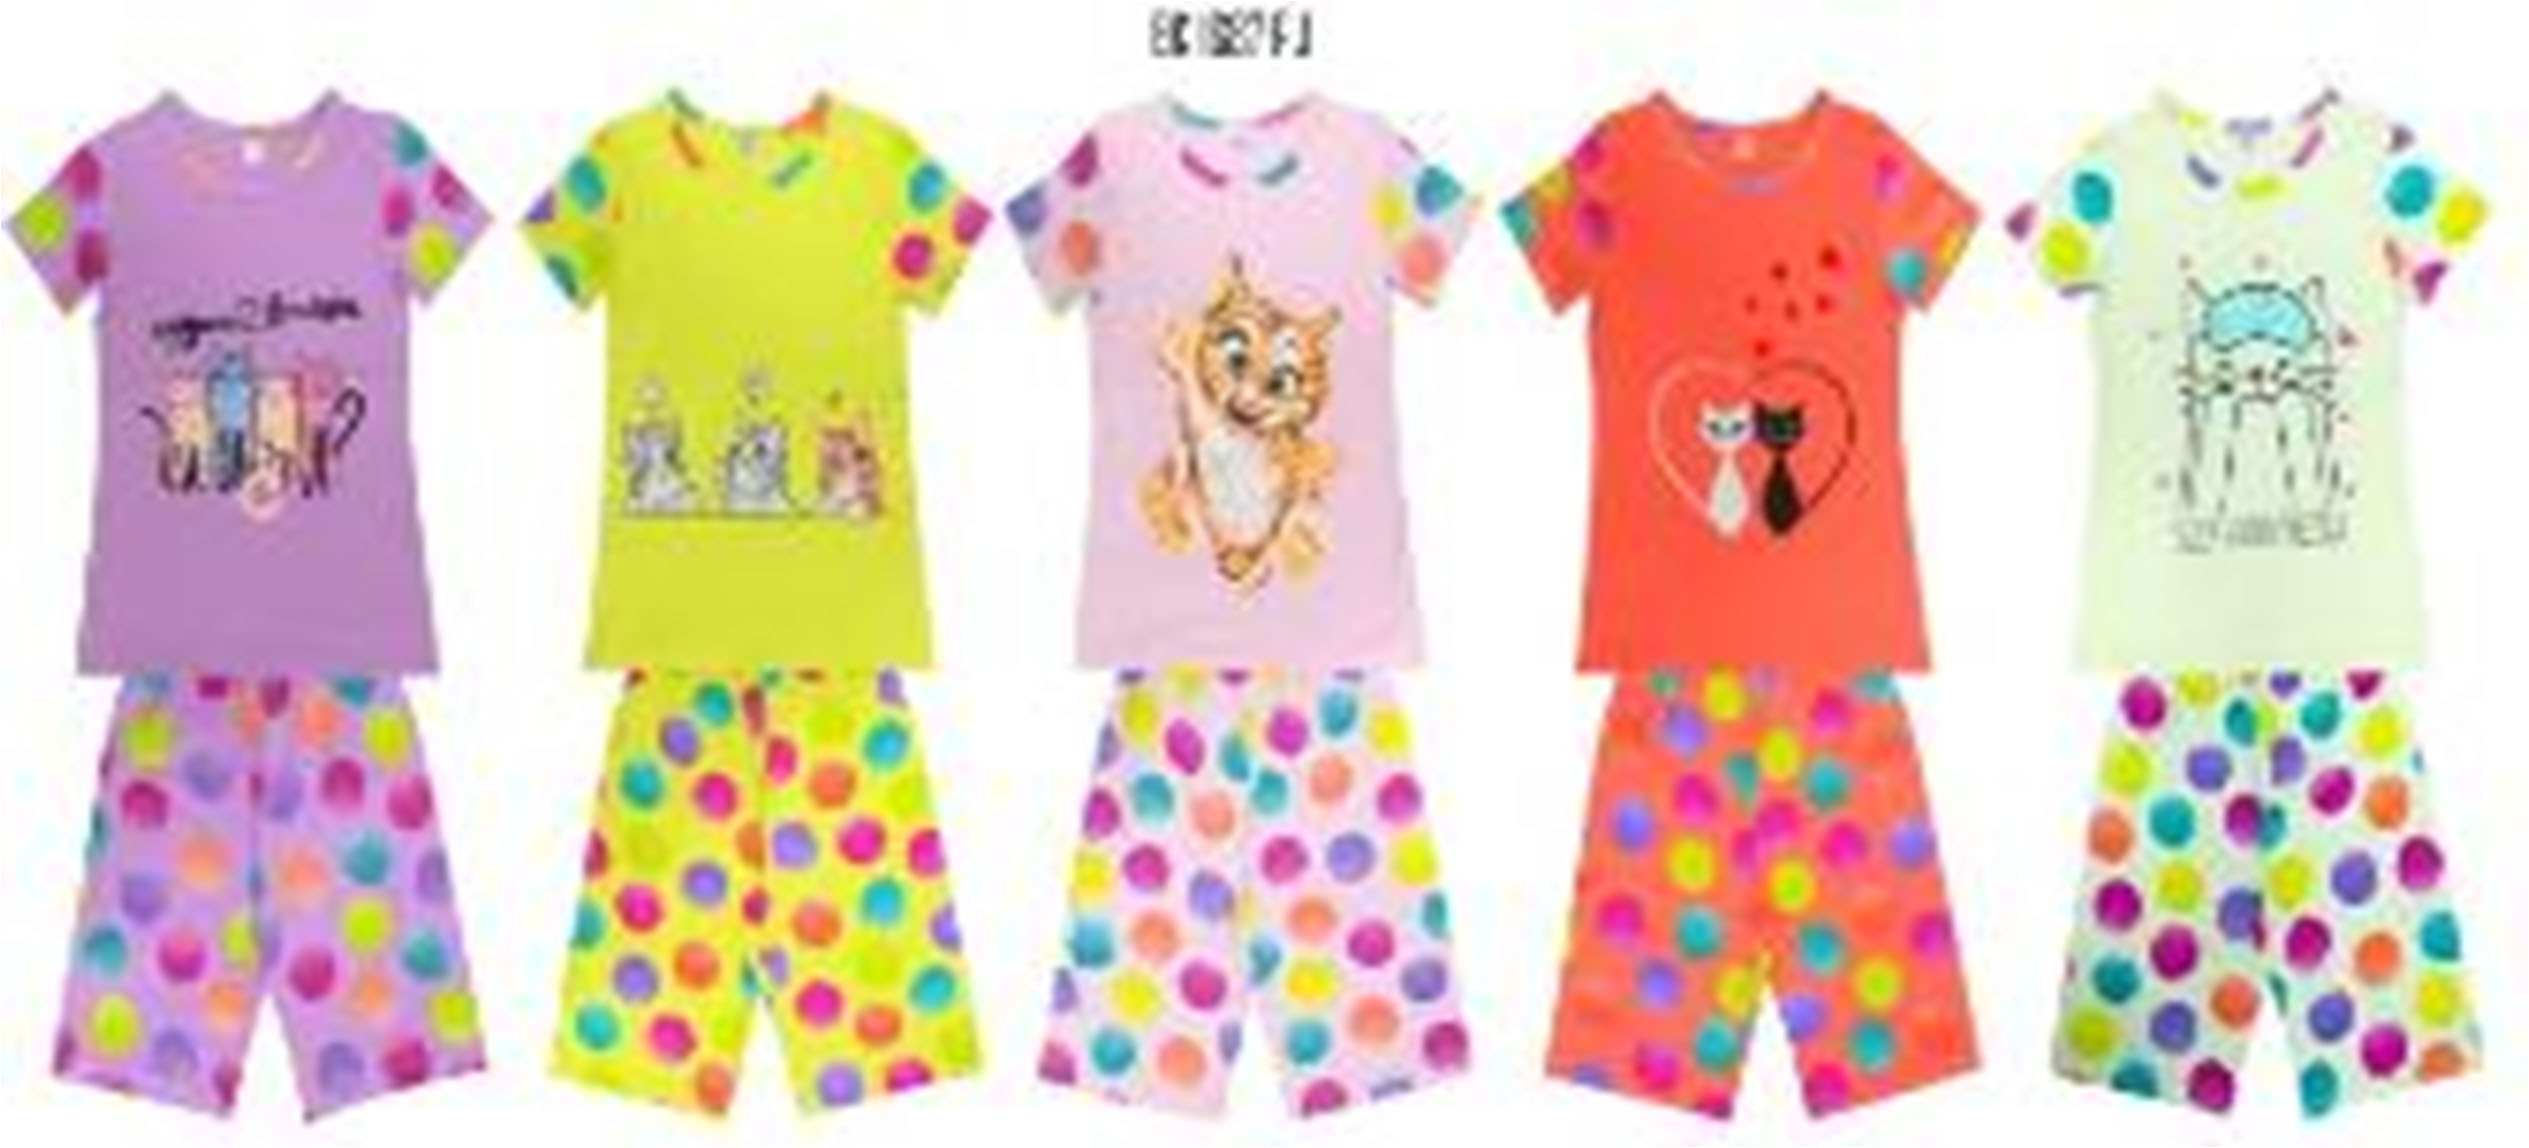 Пижама для девочки BONITO 1687 футболка шорты интерлок Текстиль Центр 